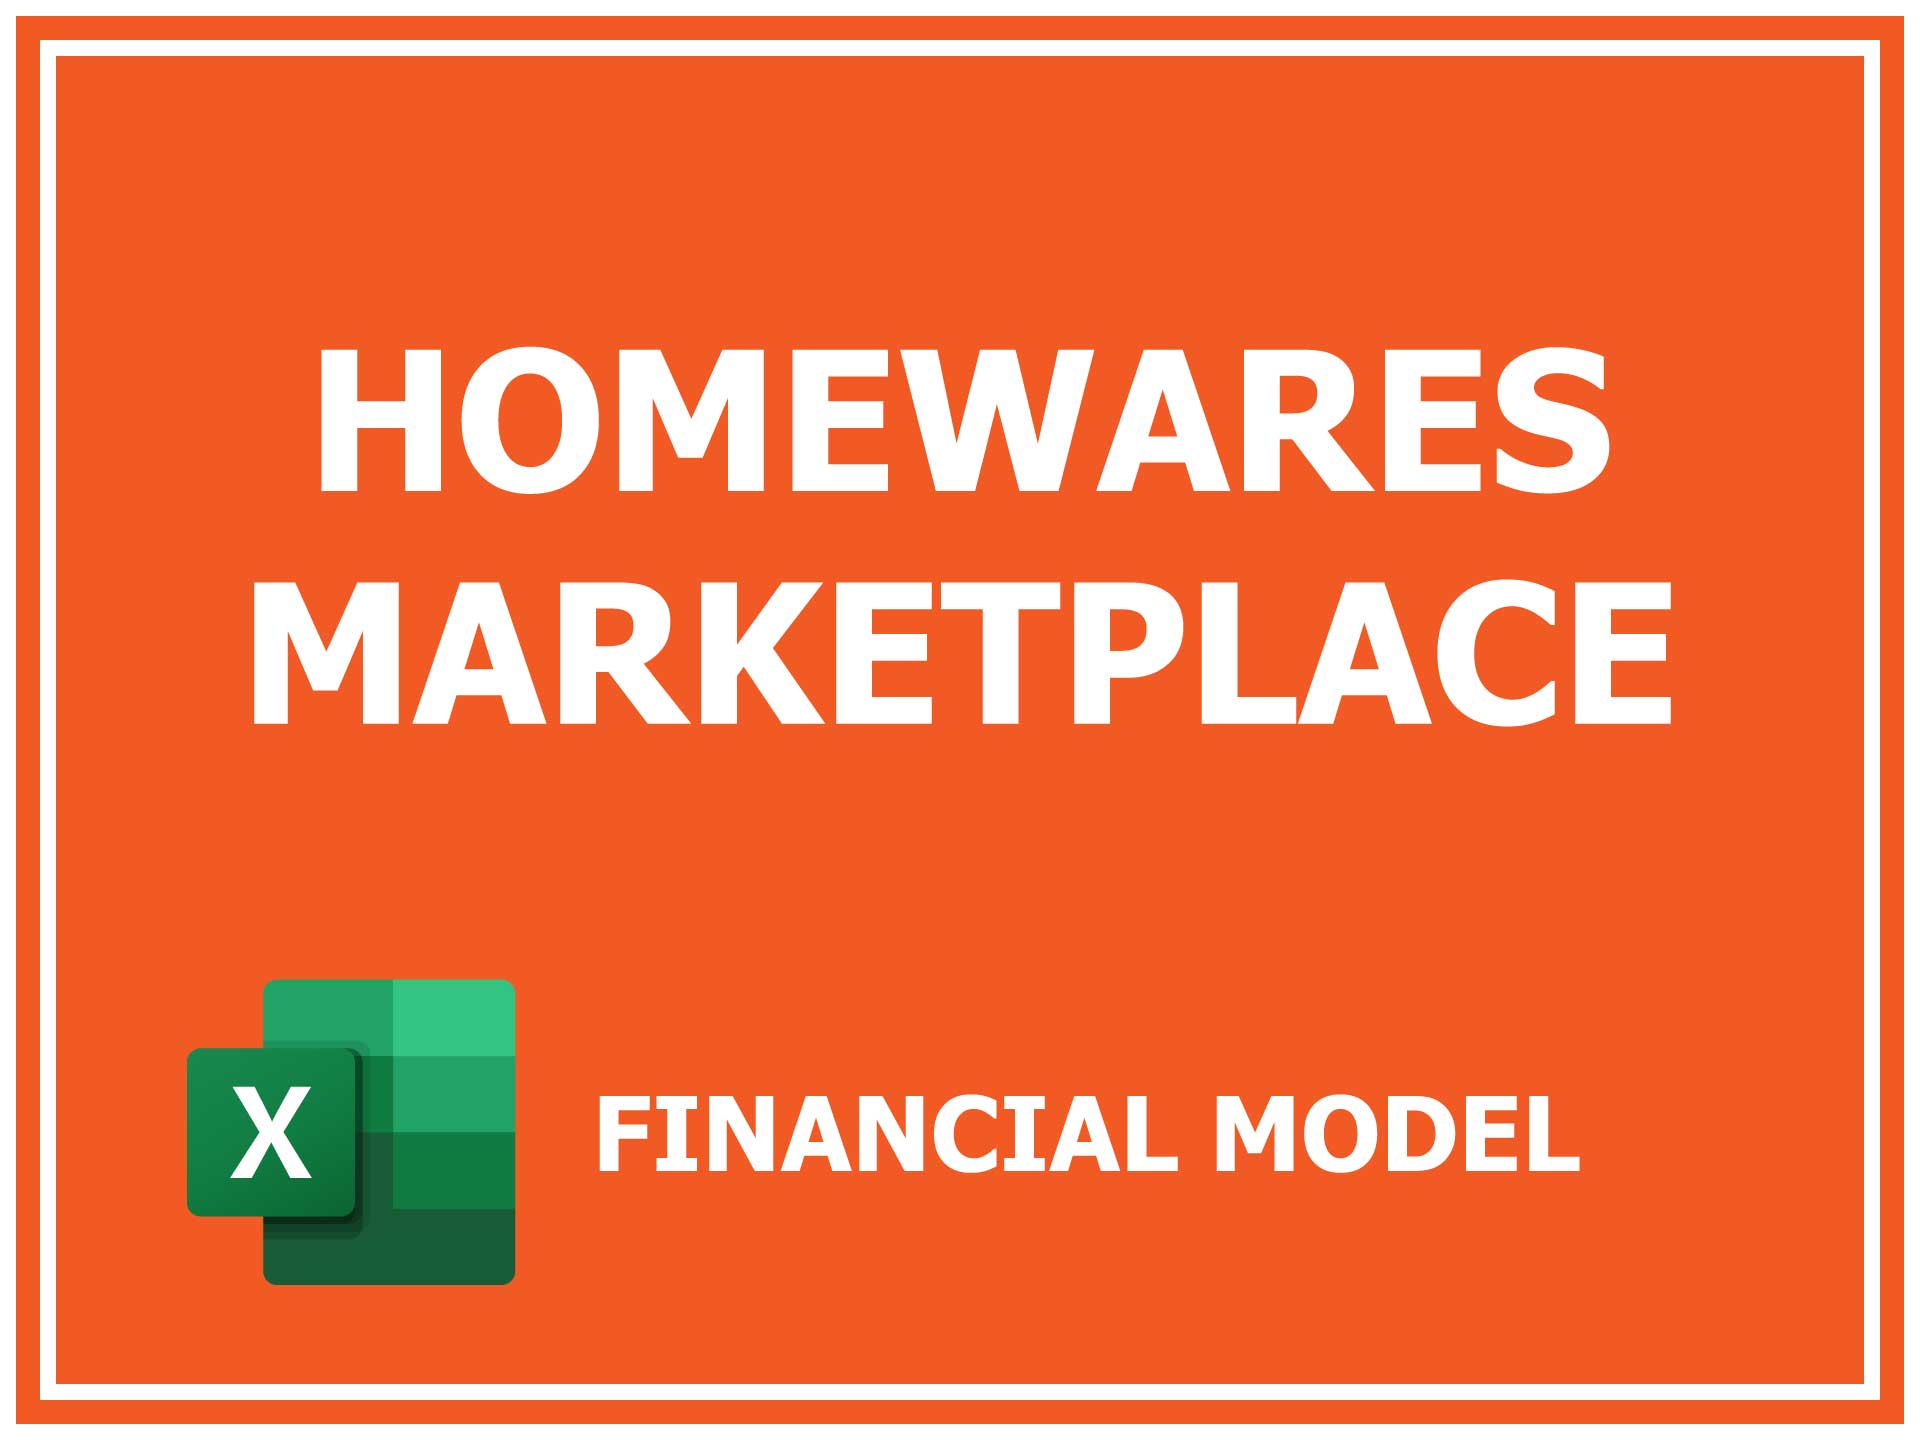 Homewares Marketplace